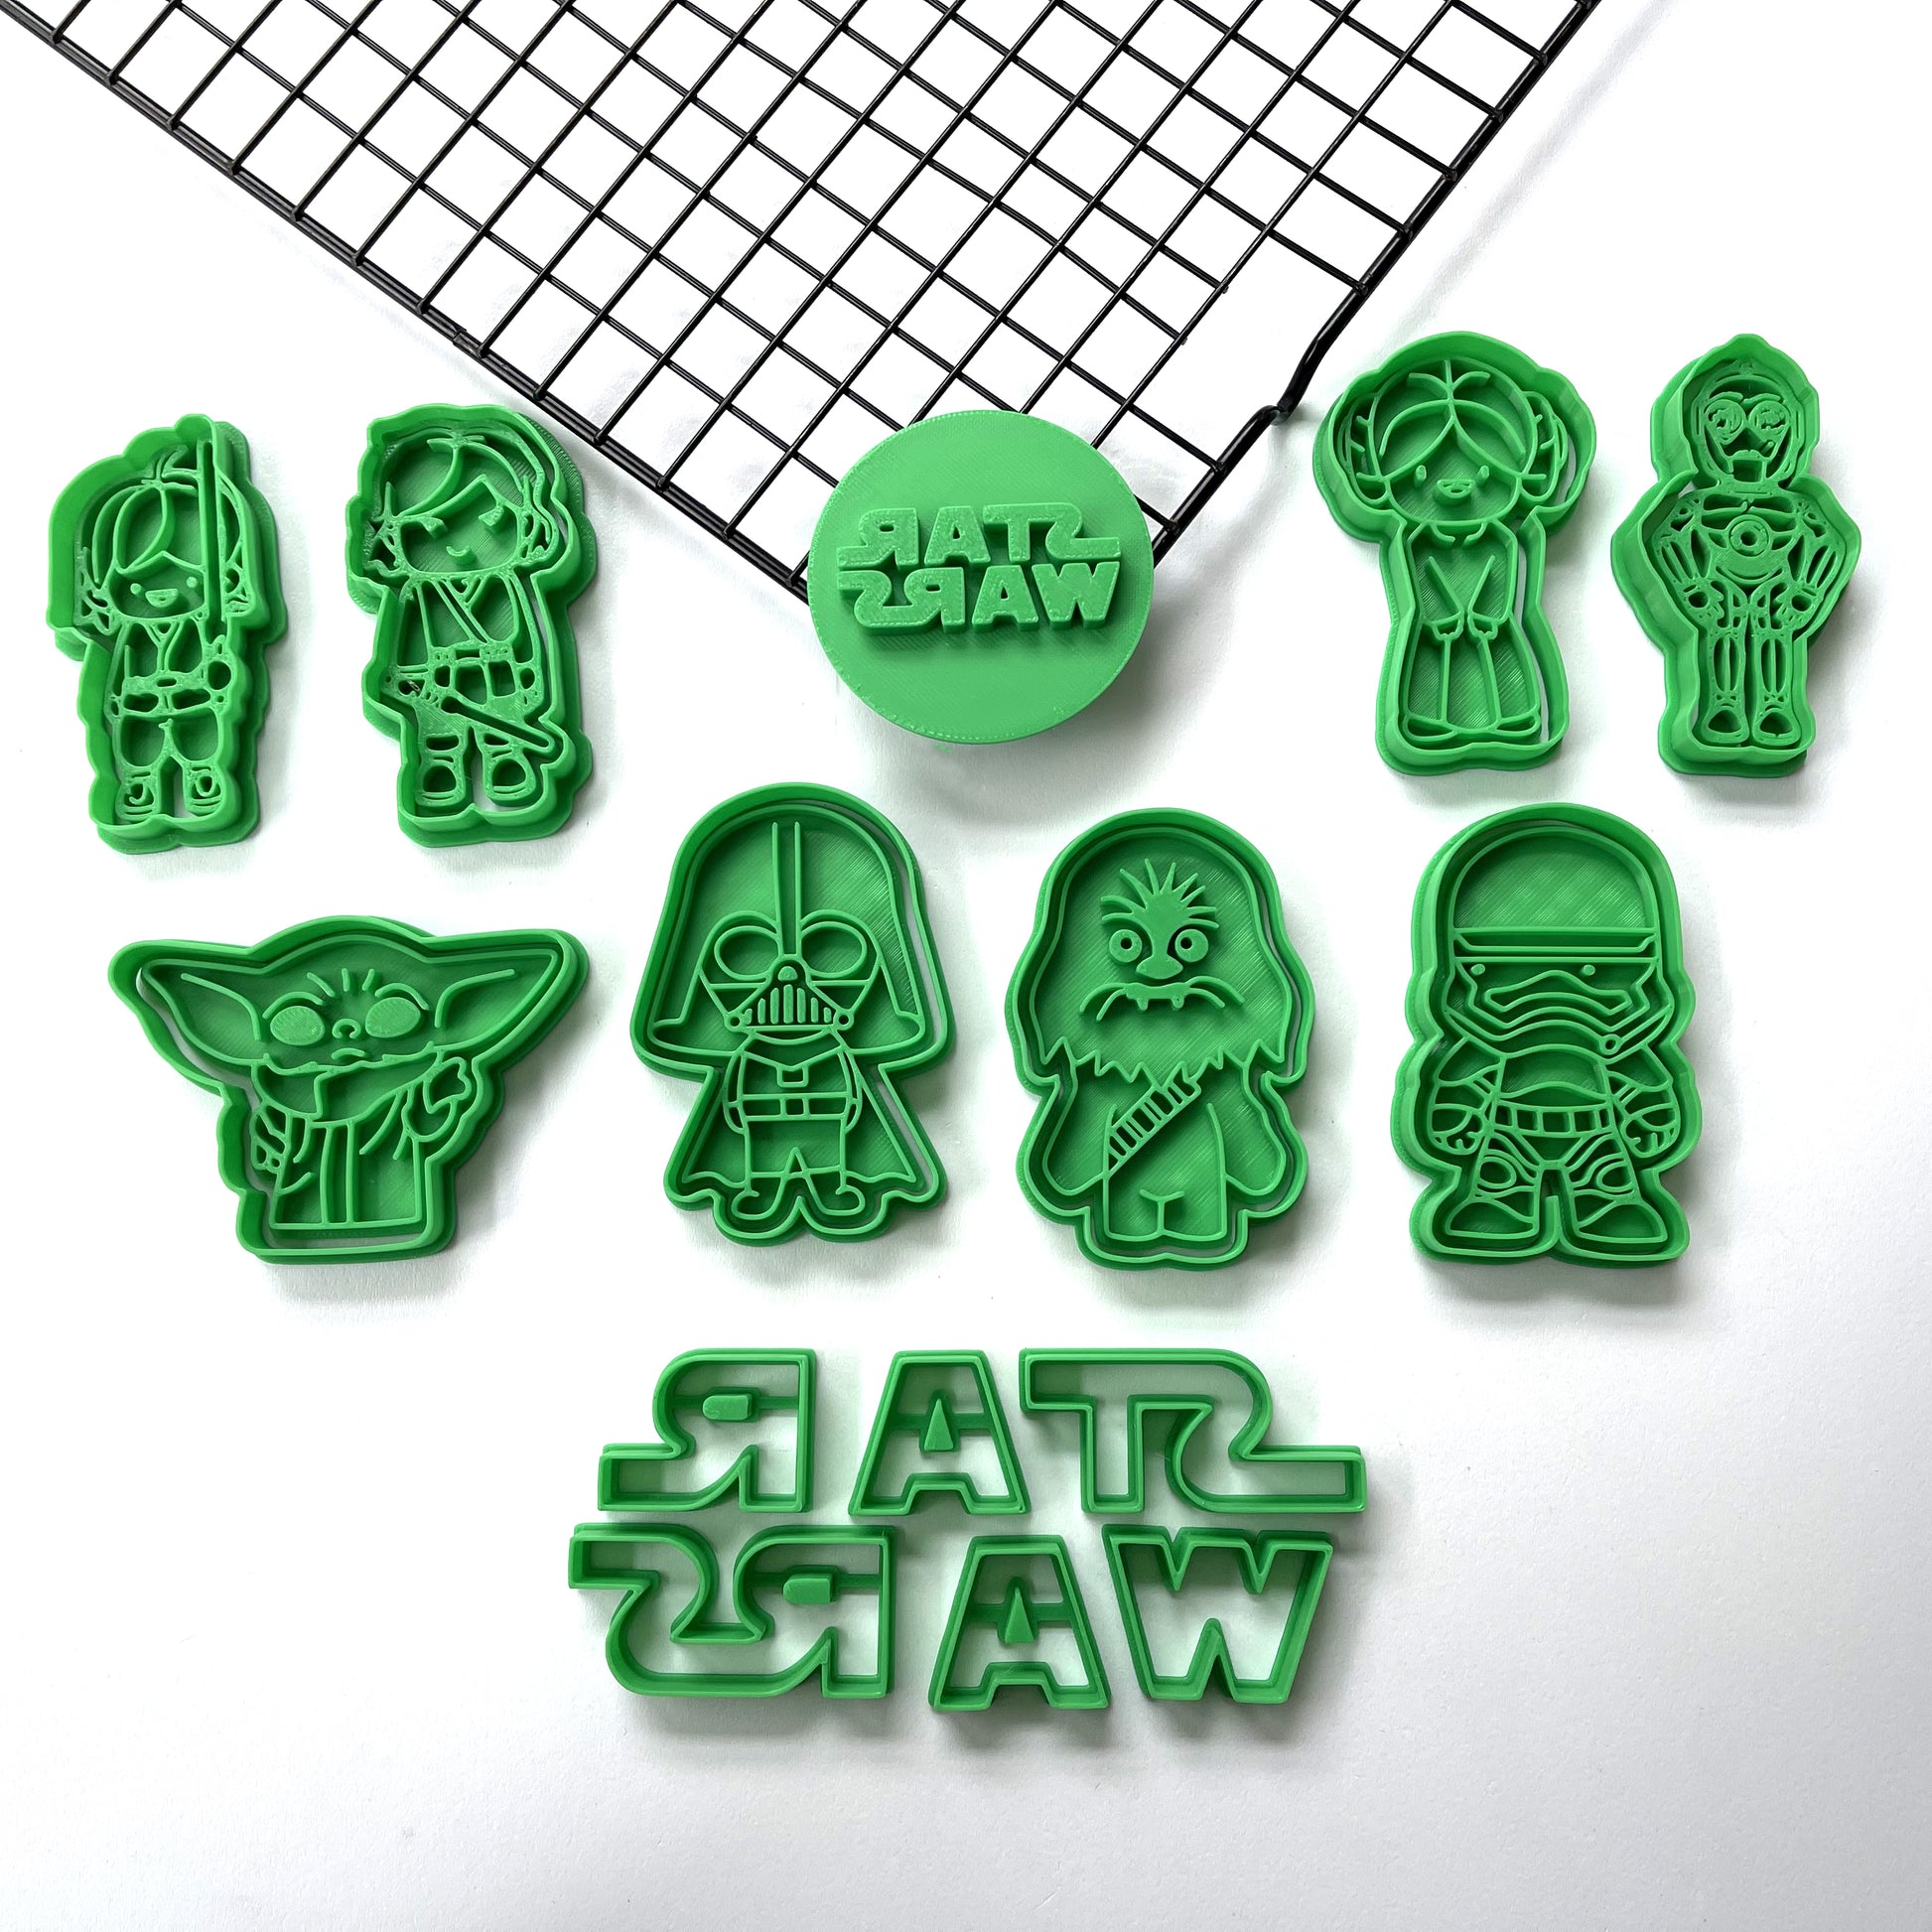 Star Wars cookie cutter + stamp MEG cookie cutters